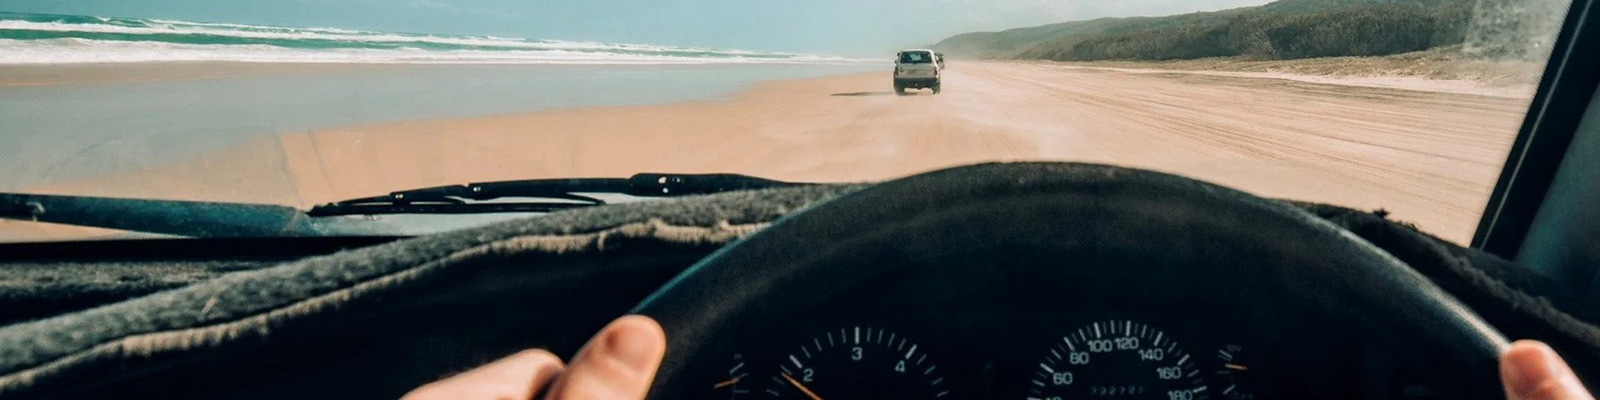 QLD driving on a beach